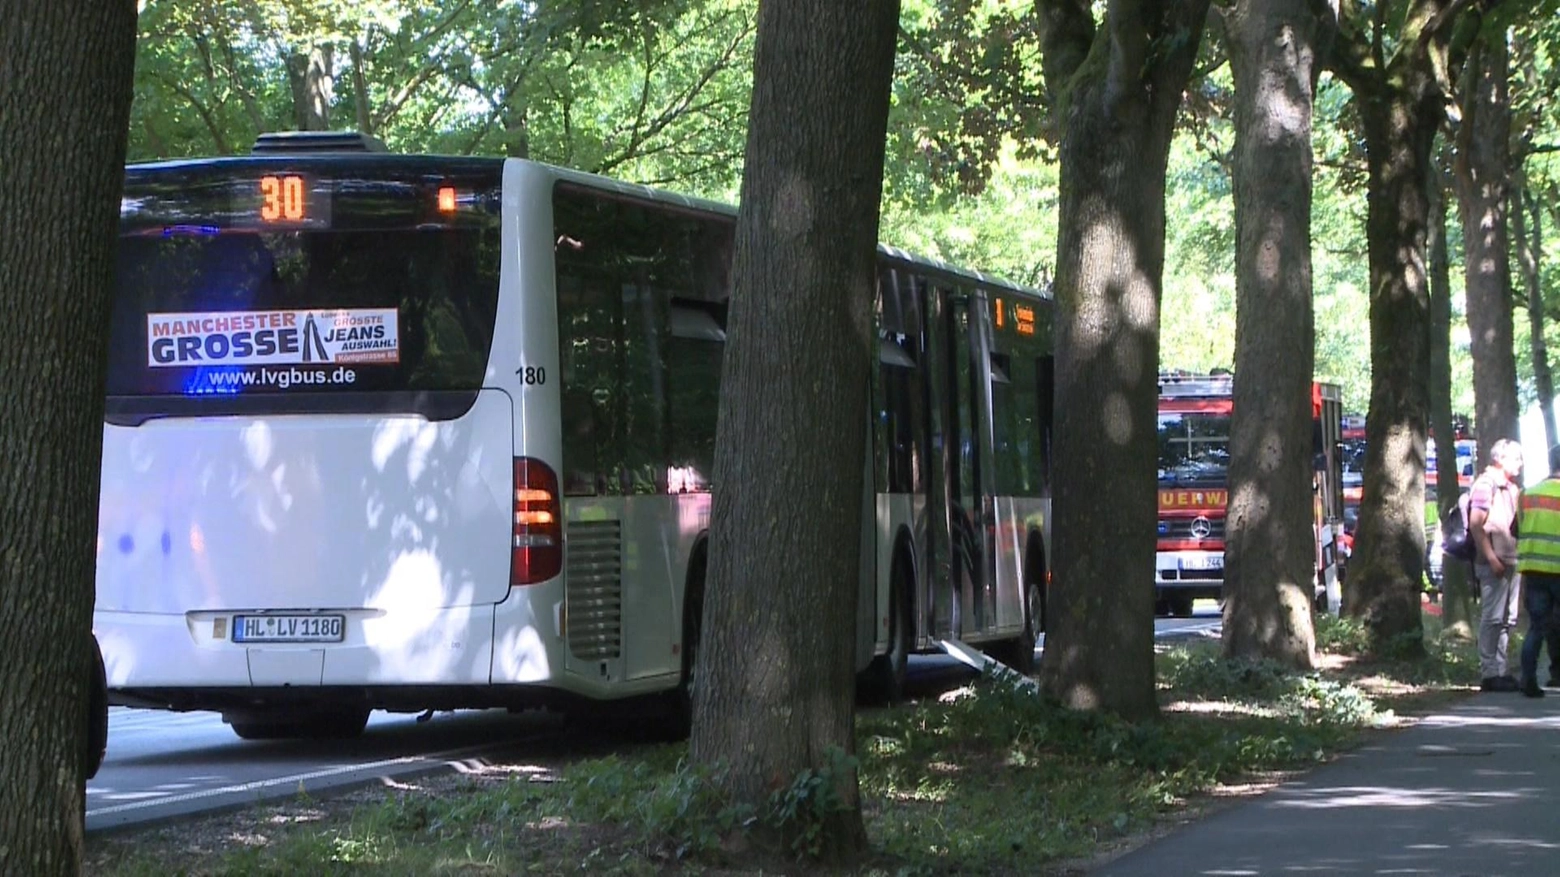 L'autobus in cui è avvenuta l'aggressione a Lubecca (Ansa)